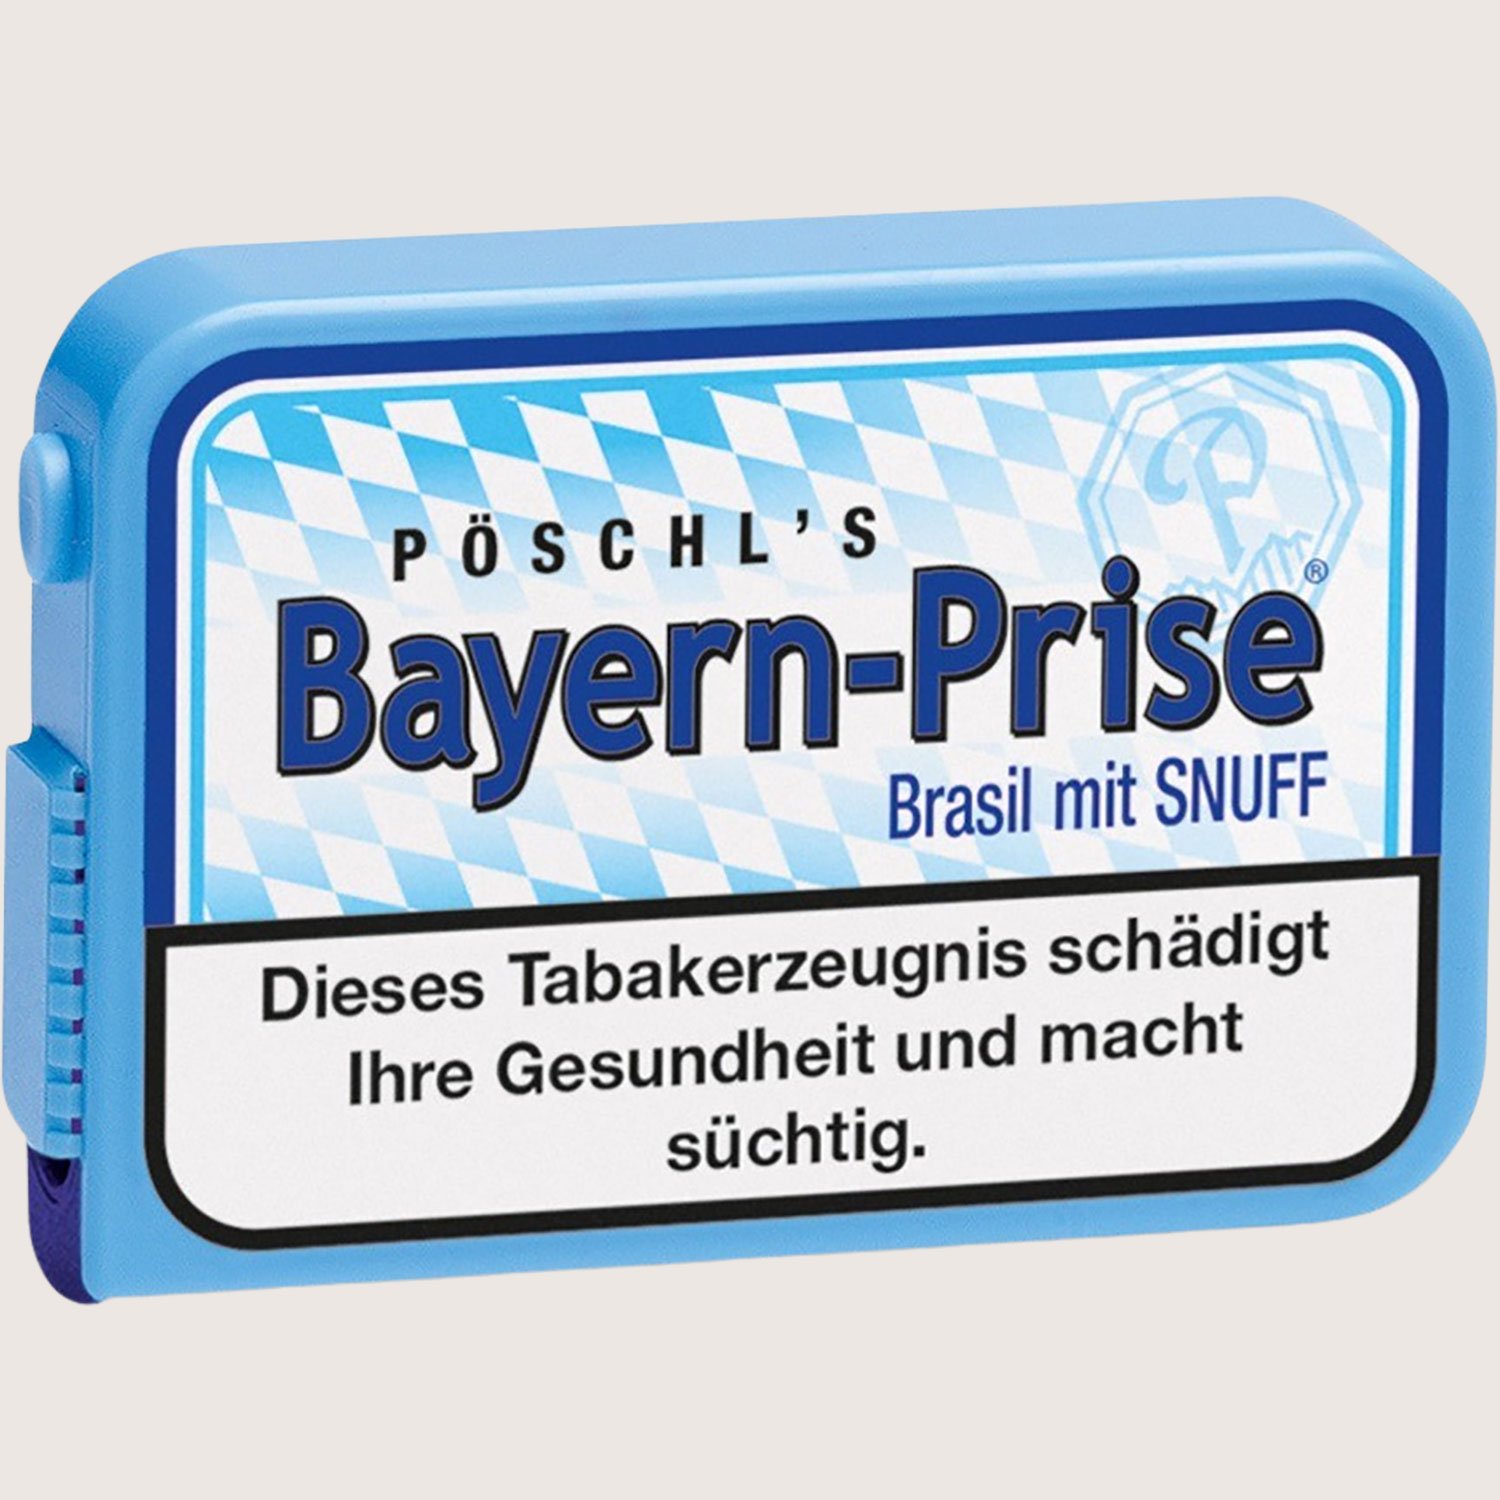 Pöschl Bayern-Prise Brasil mit Snuff